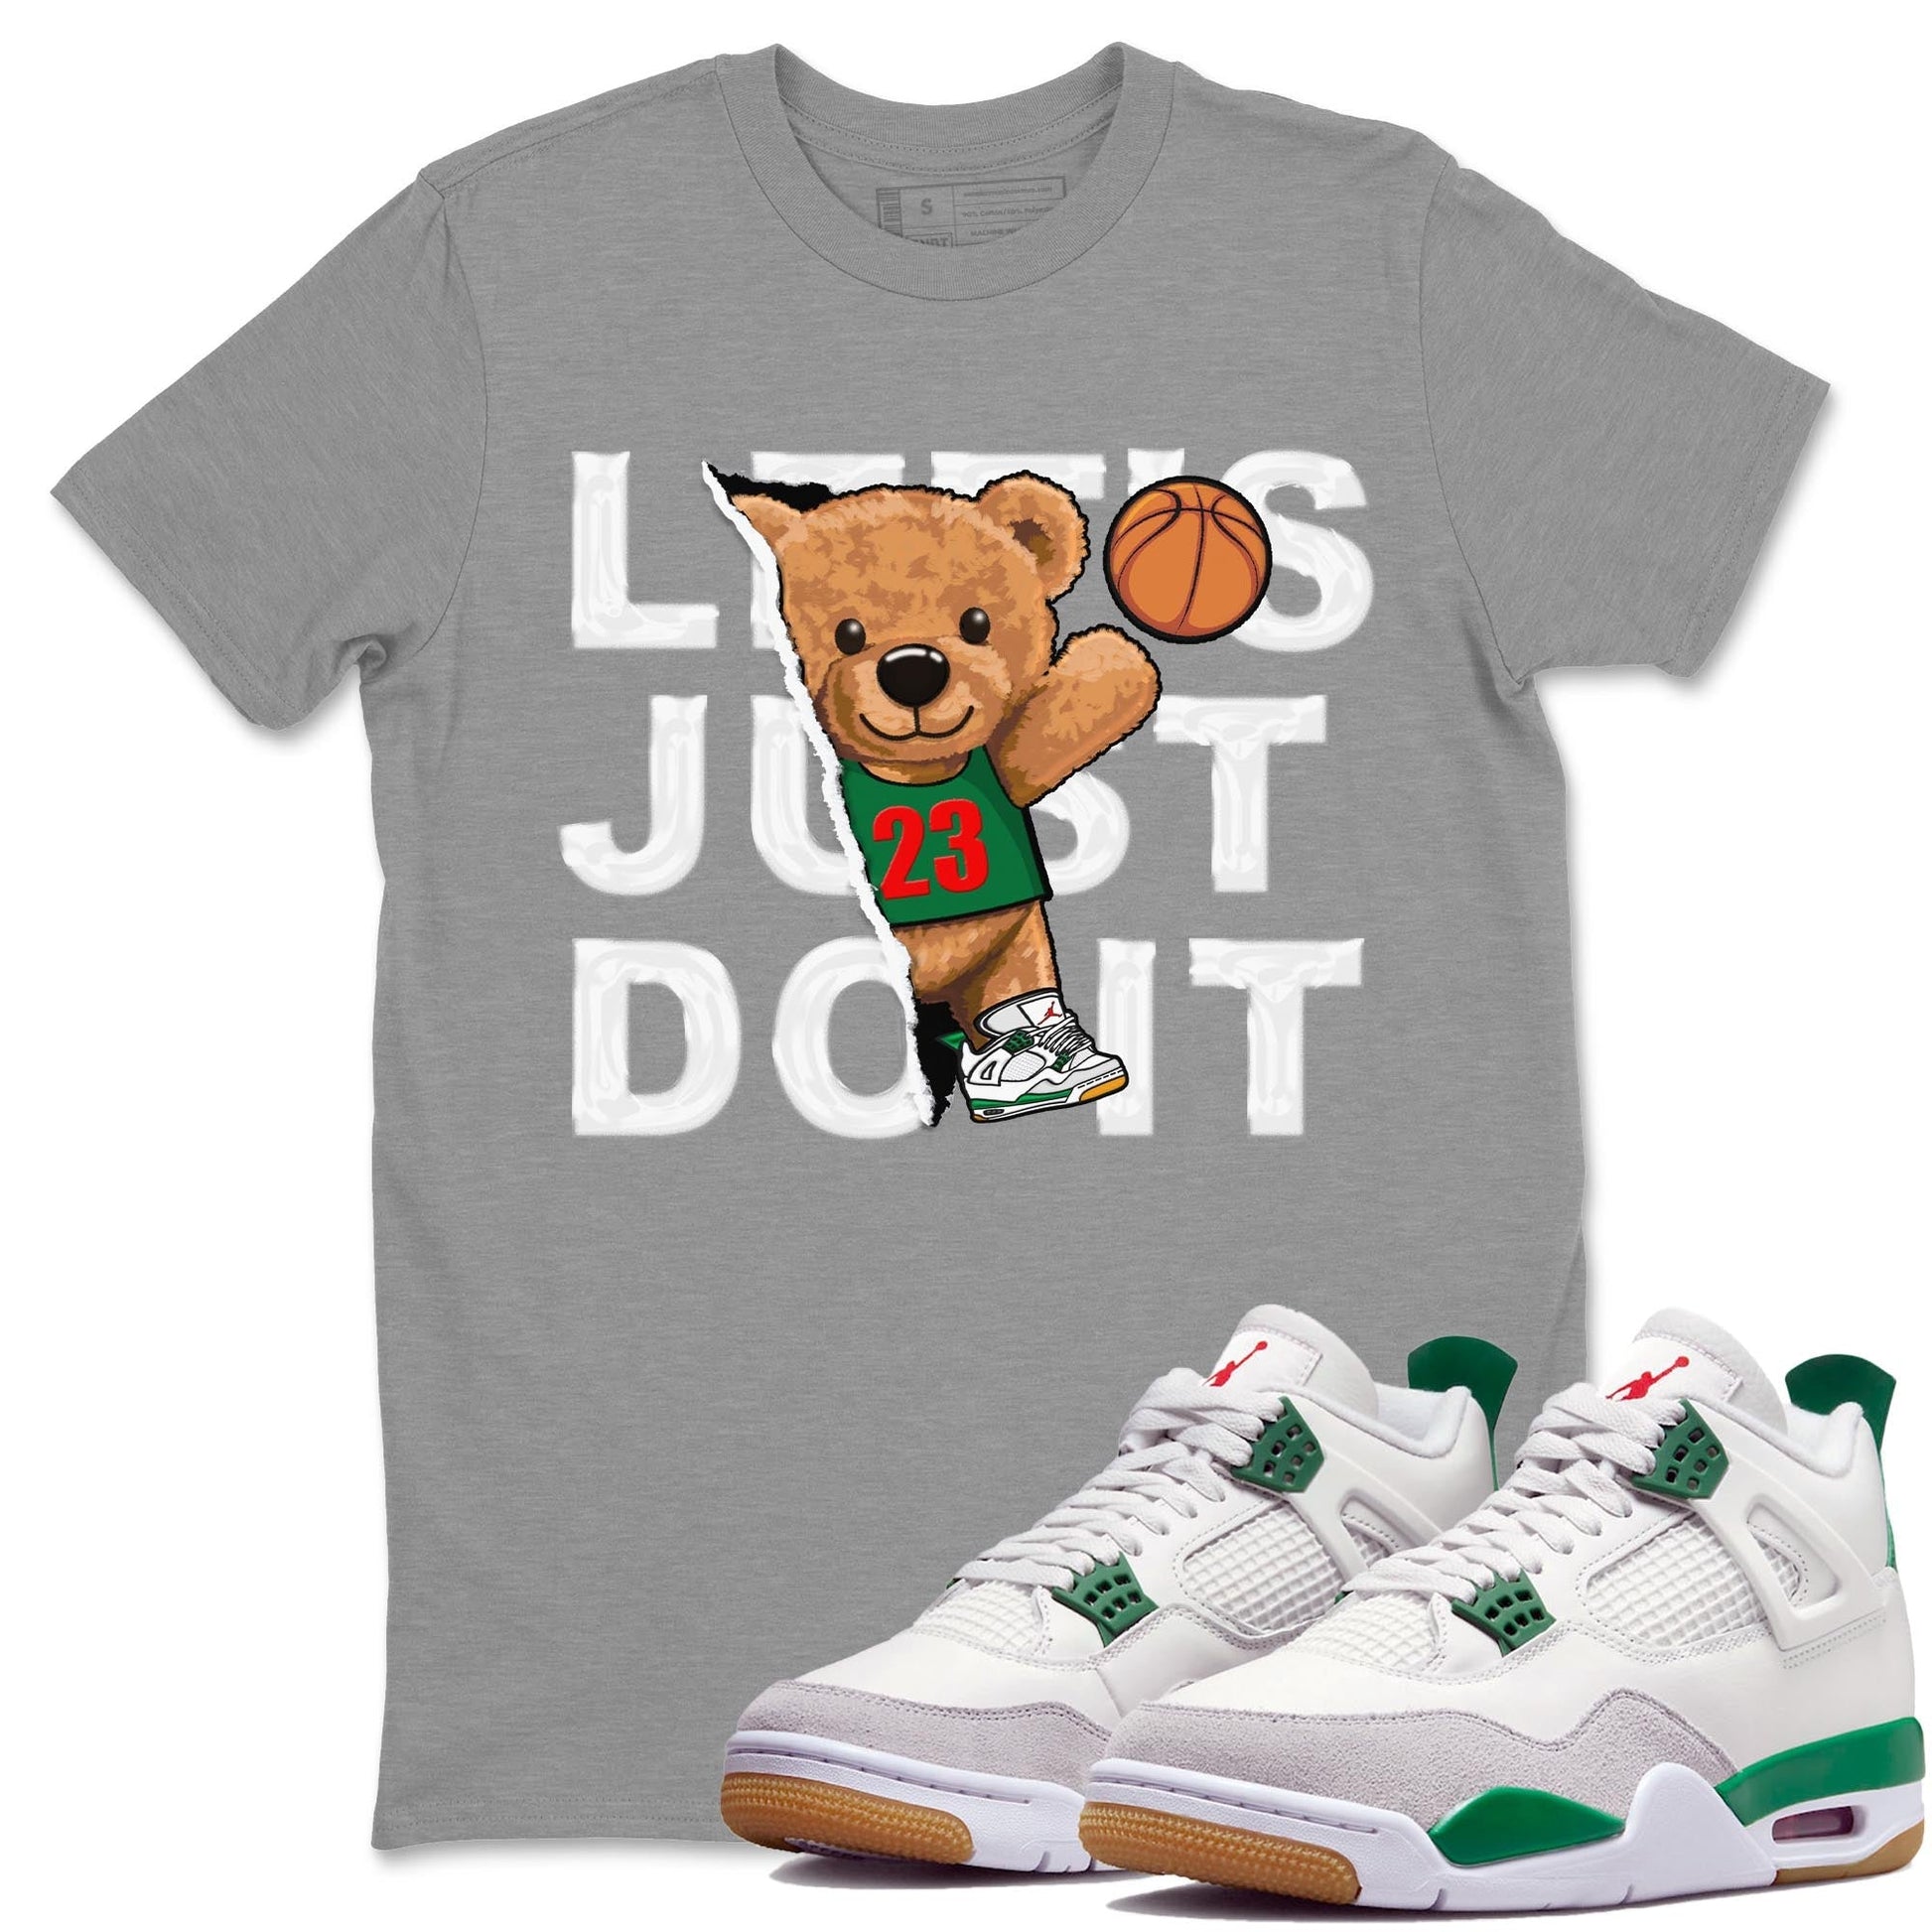 Jordan 4 Pine Green SB Sneaker Match Tees Rip Out Bear Sneaker Tees 4s Pine Green Nike SB Sneaker Tees Sneaker Release Shirts Unisex Shirts Heather Grey 1